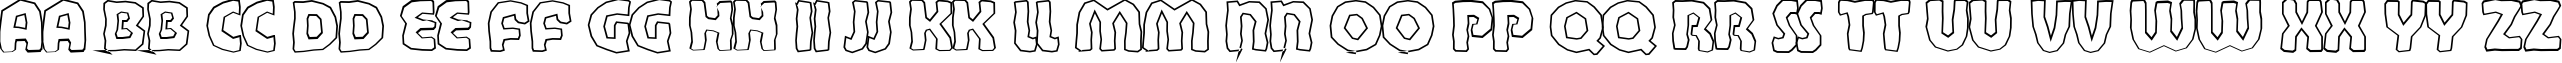 Пример написания английского алфавита шрифтом a_BighausTitulBrkHll